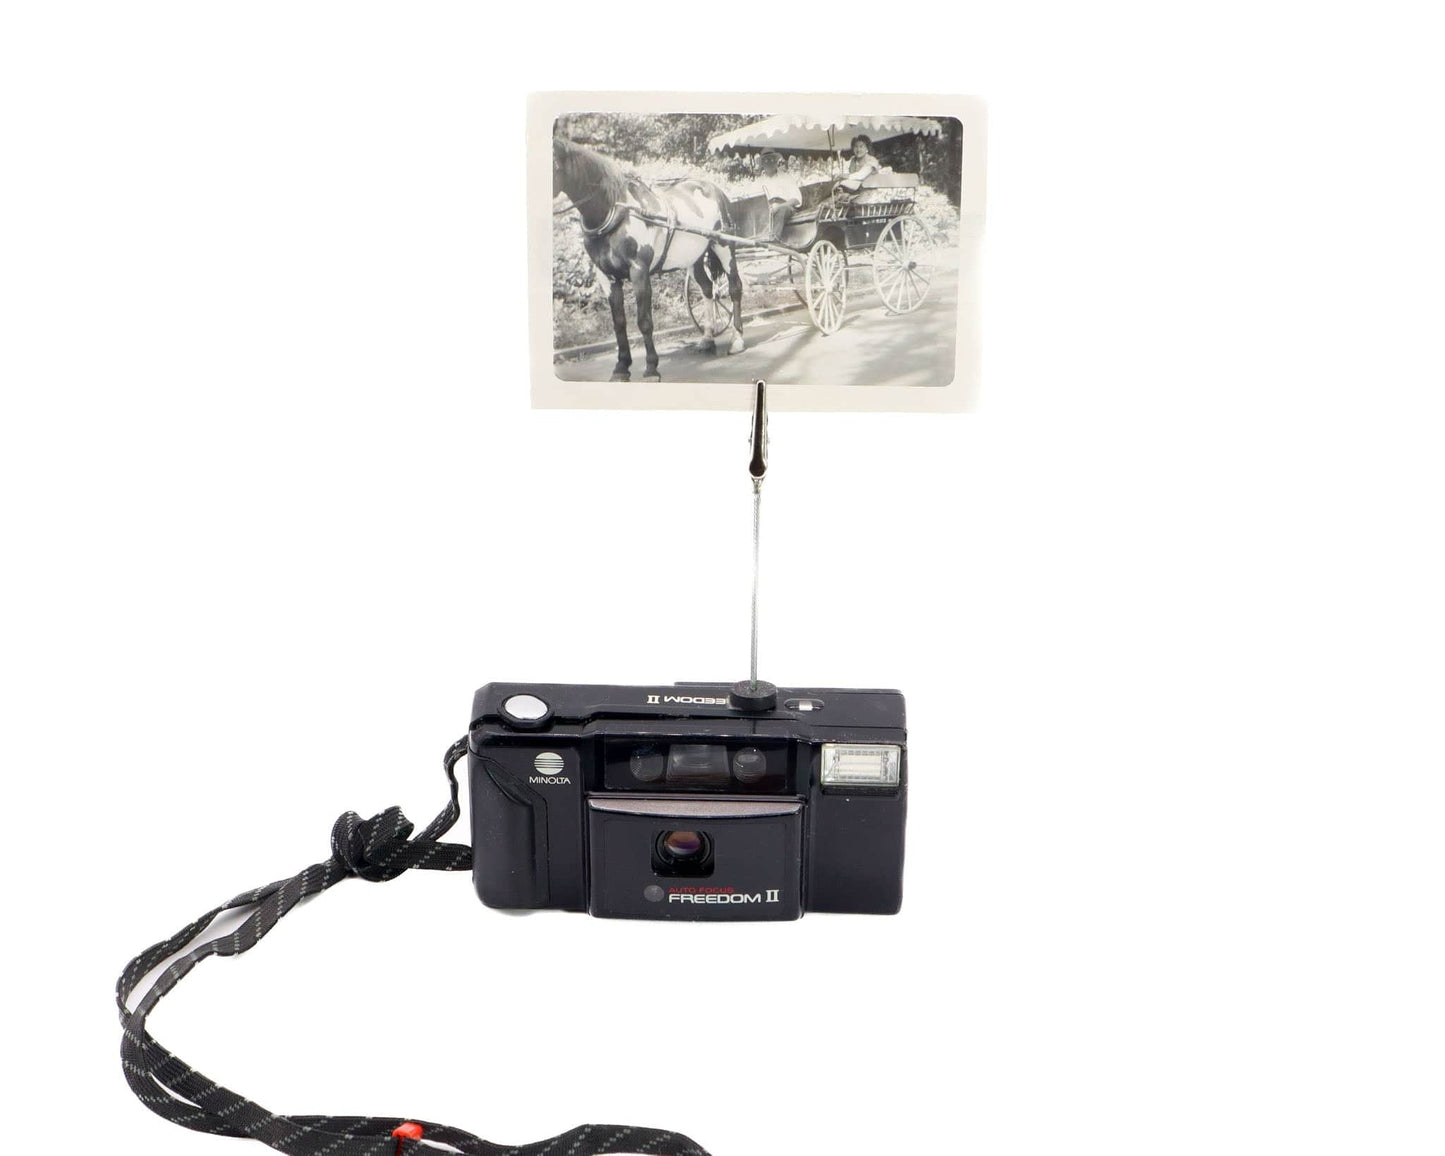 LightAndTimeArt Photo Holder Vintage Camera Photo Holder, Minolta Freedom II Camera